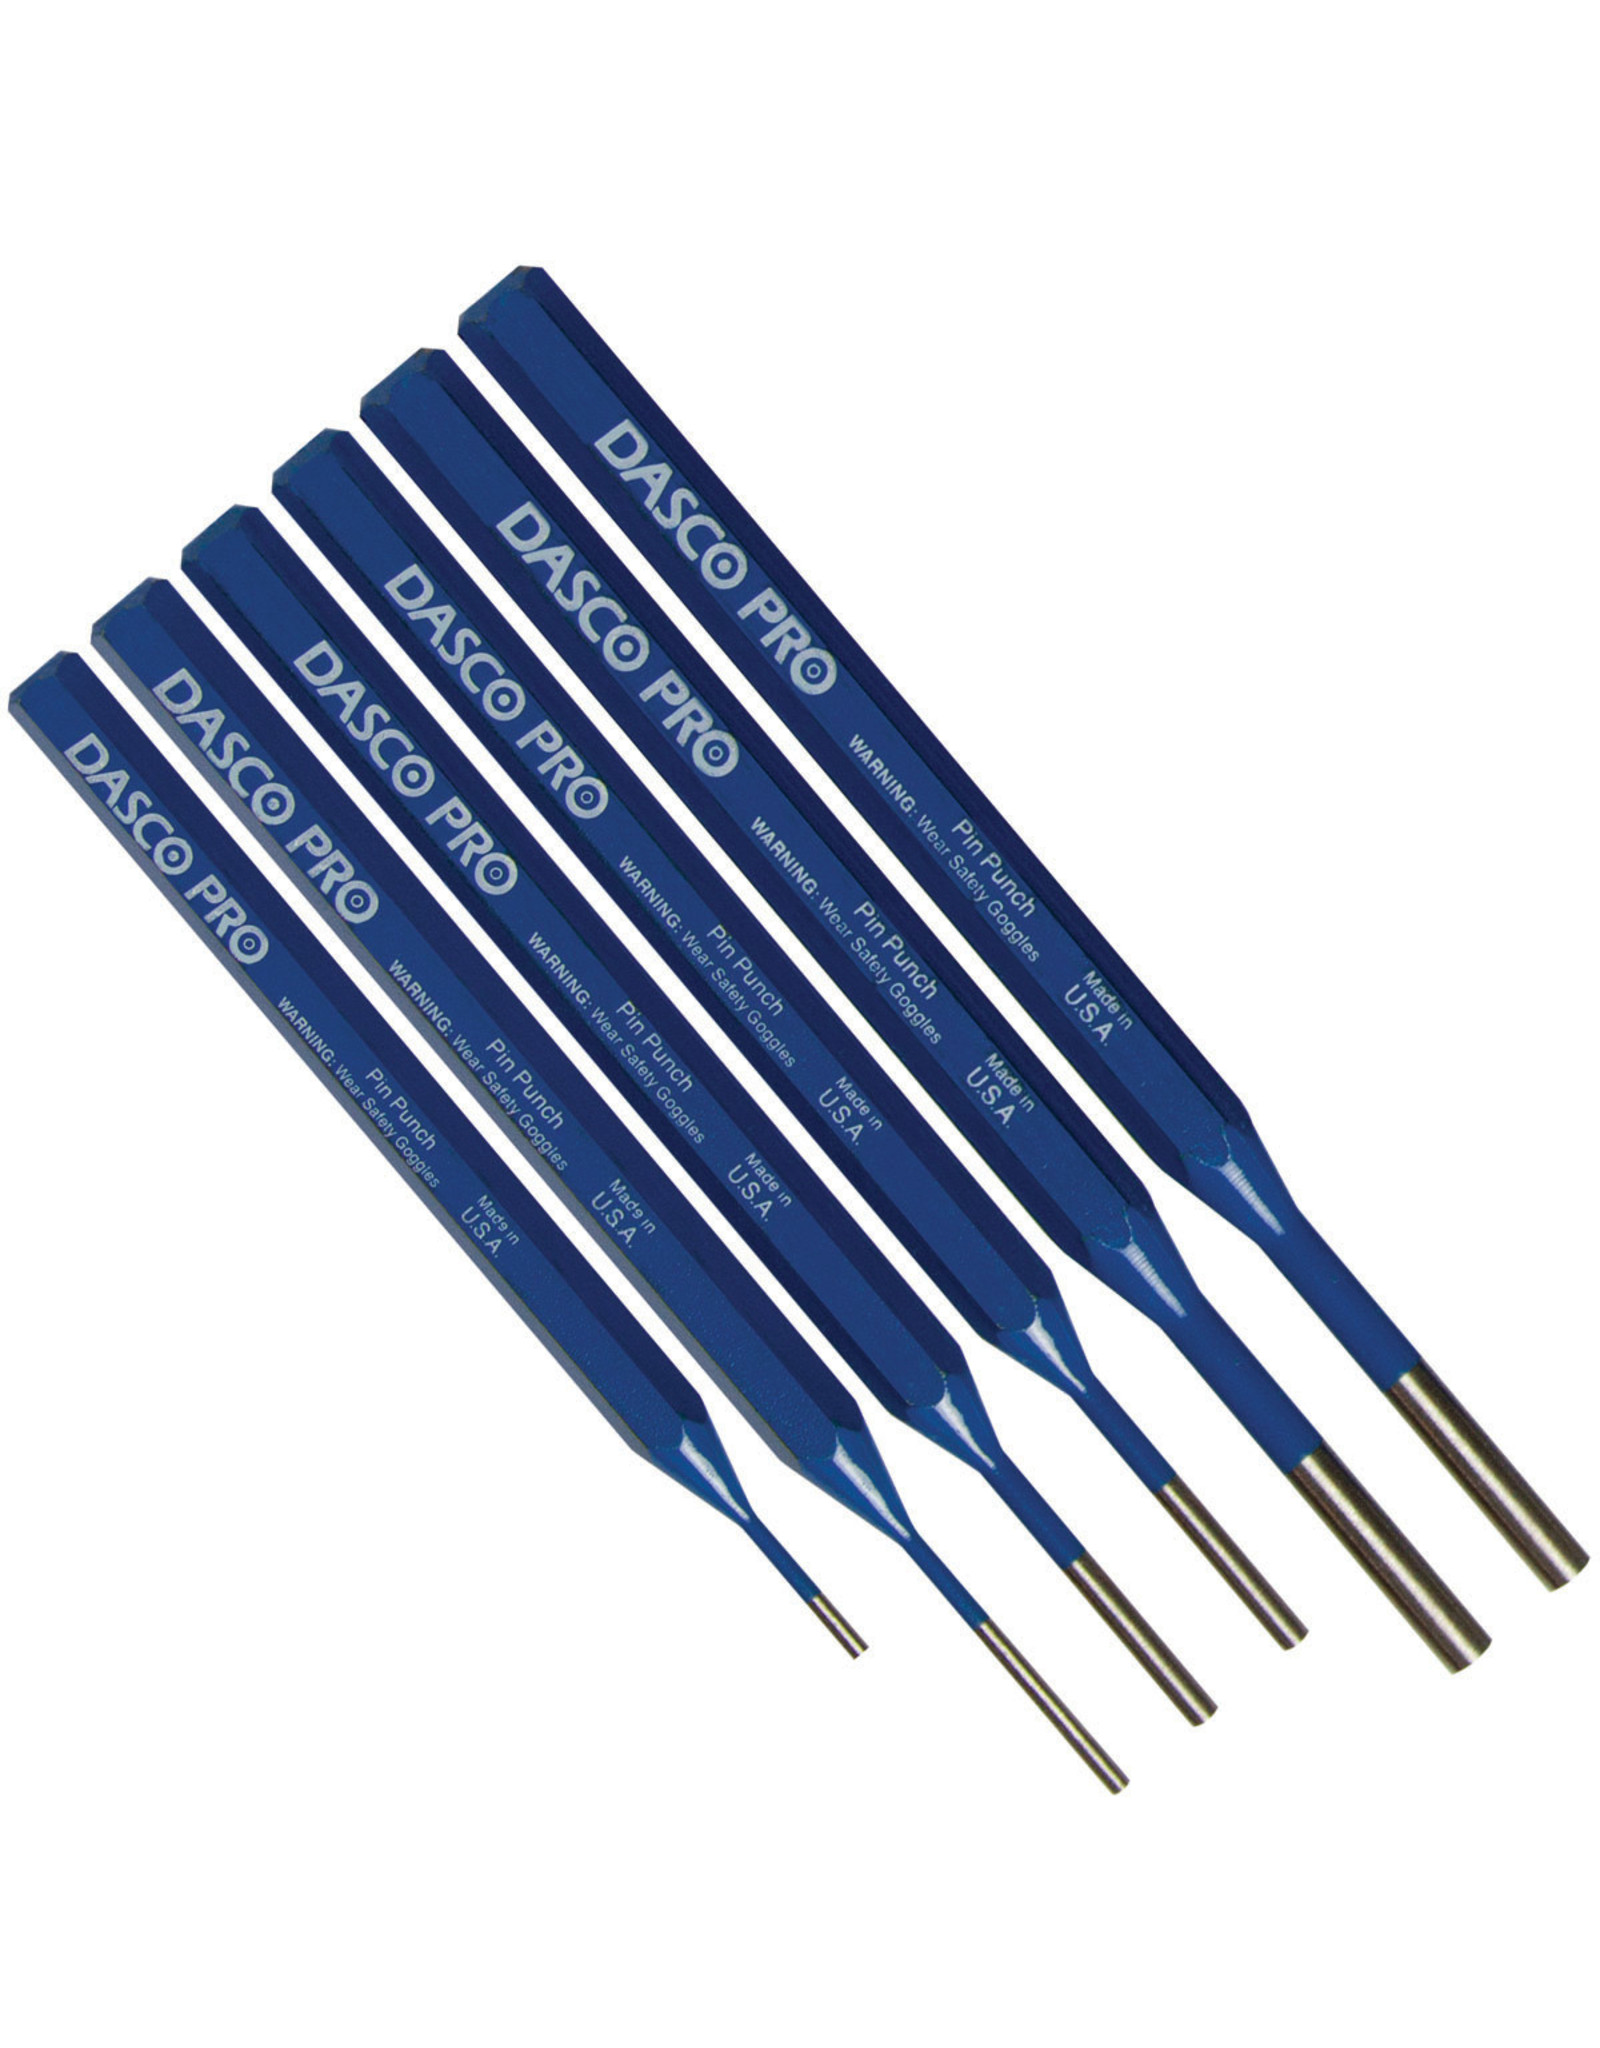 Dasco DASCO PRO 22 Pin Punch Kit, Steel, Blue, 6-Piece*